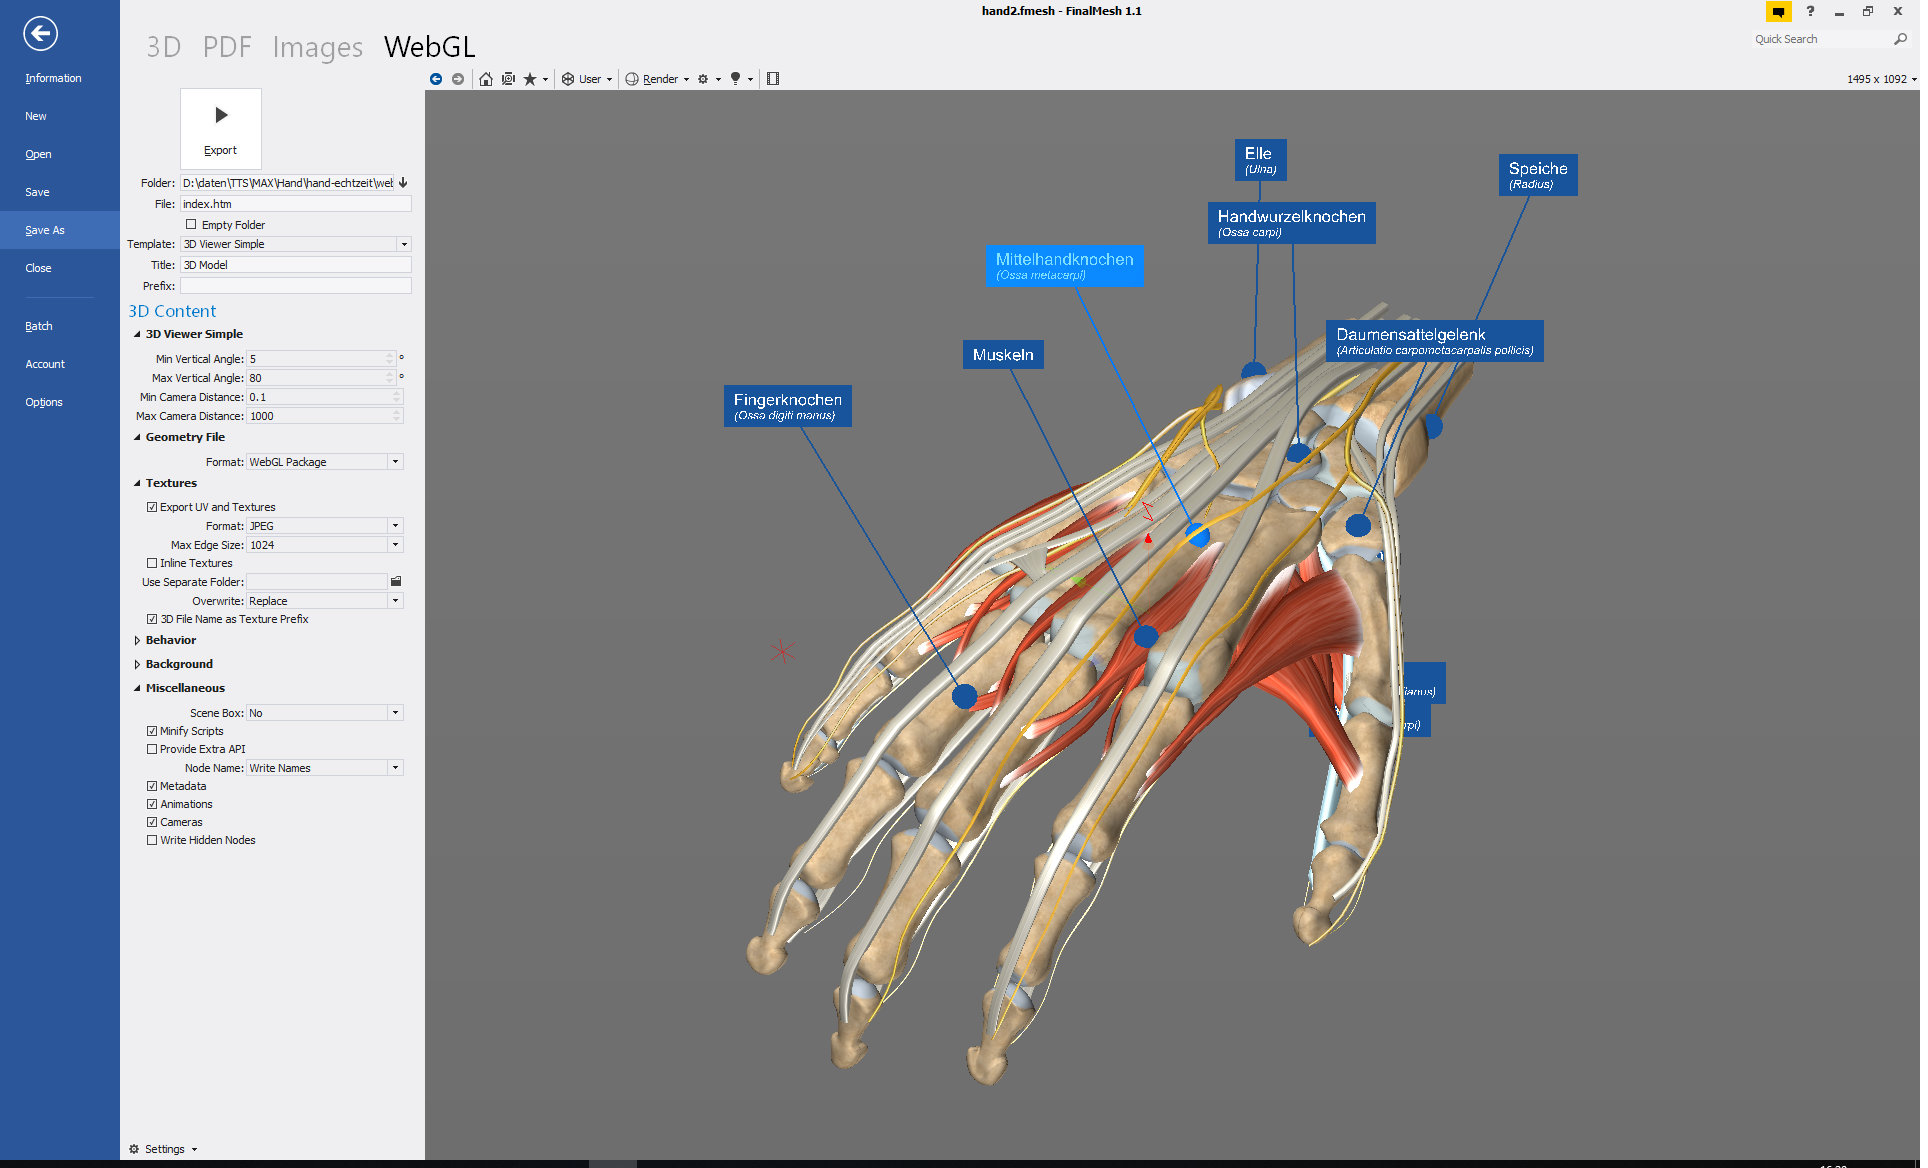 finalmesh hand anatomie